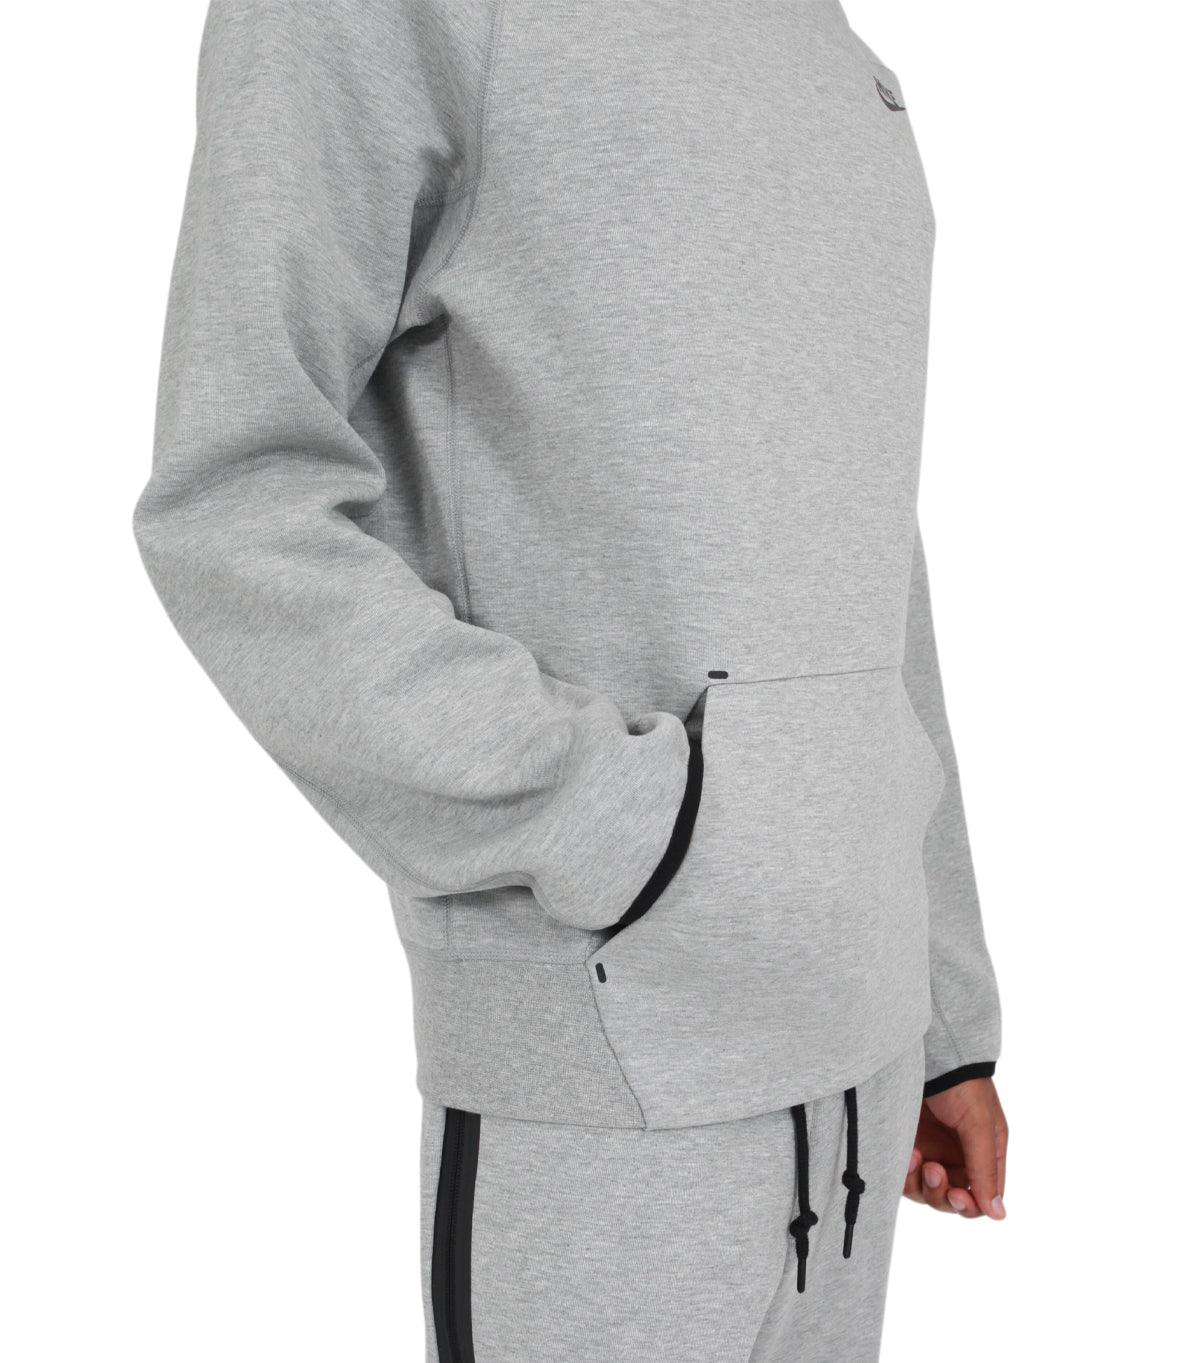 Nike Tech Fleece Pocket Crewneck Grey | SOMEWHERE